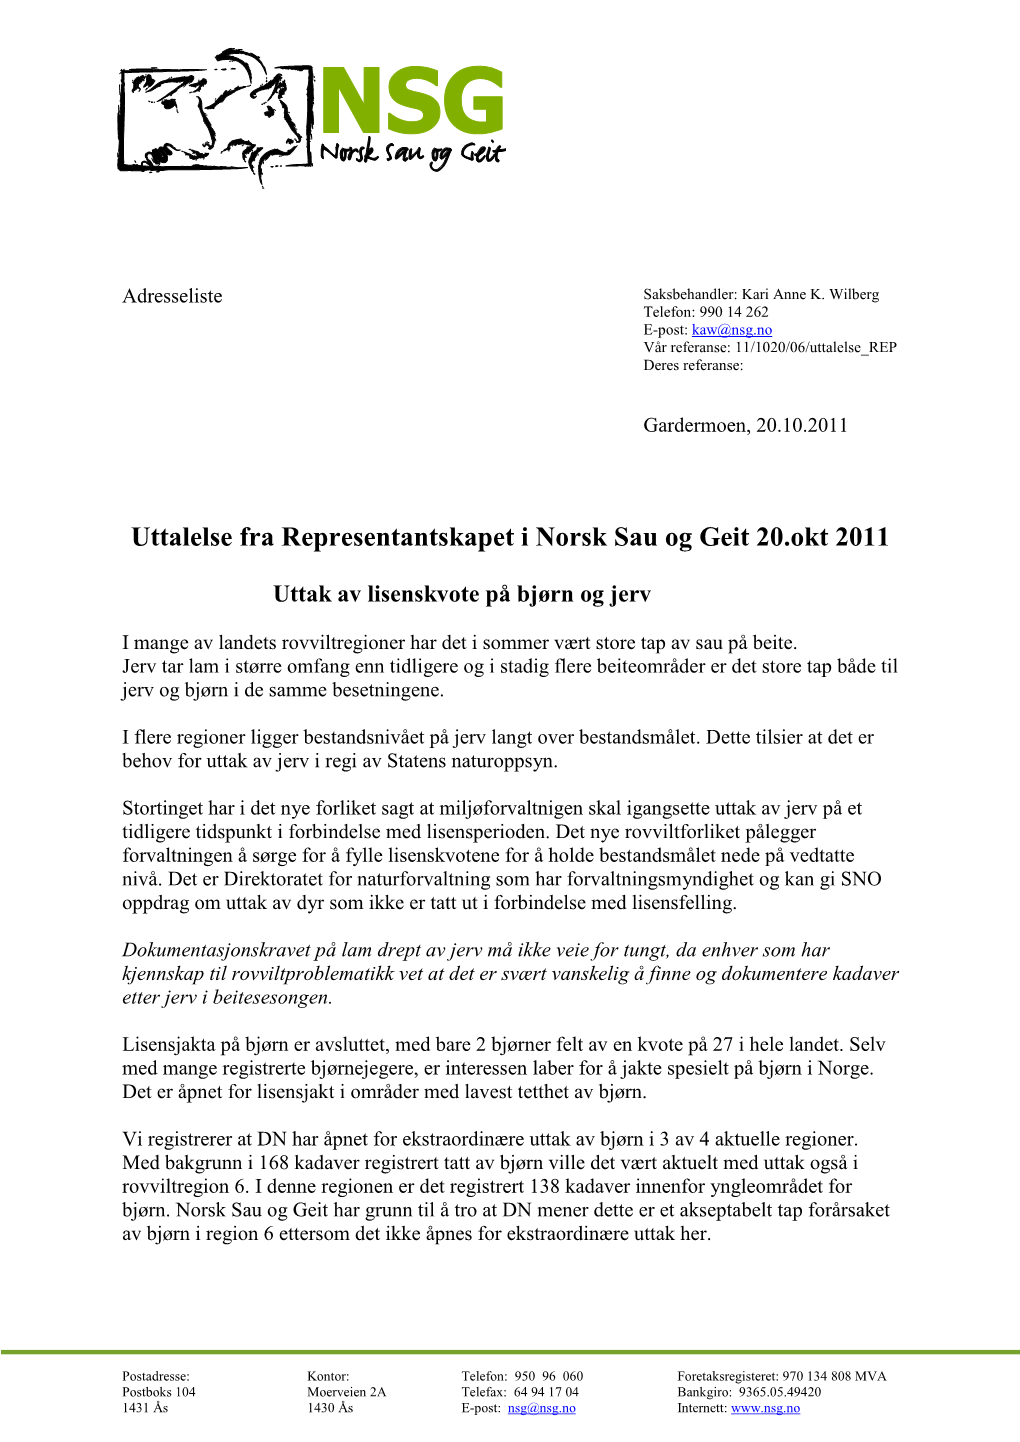 Uttalelse Fra Representantskapet I Norsk Sau Og Geit 20.Okt 2011